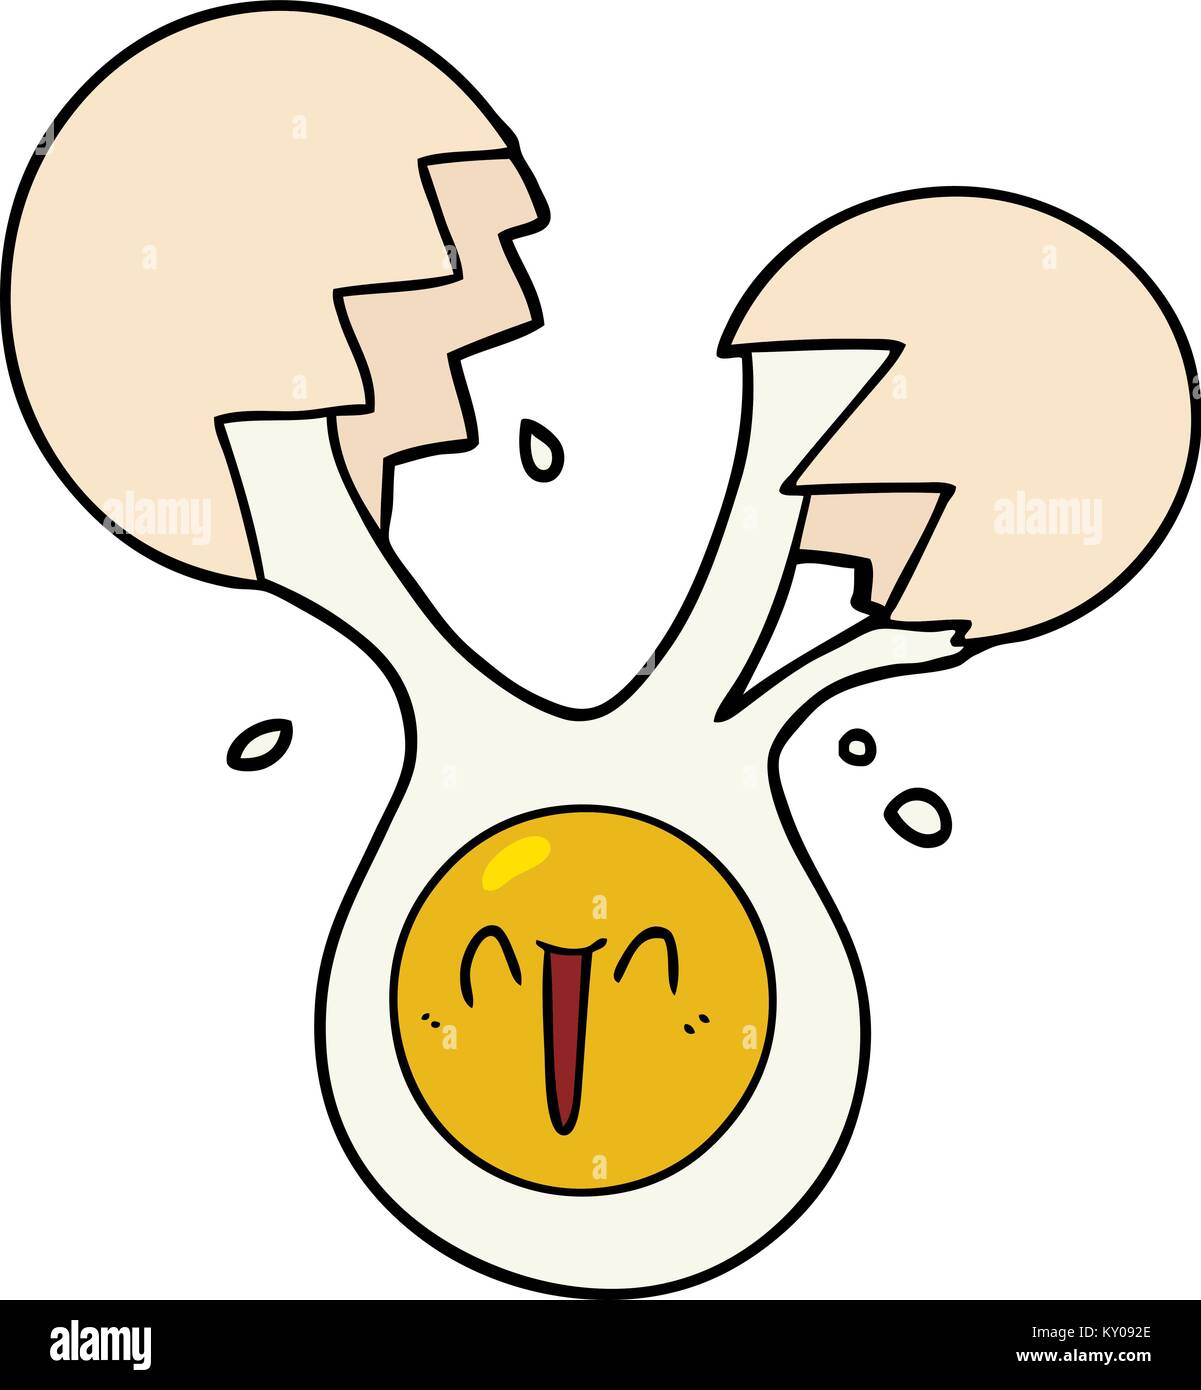 Cracked Egg Cartoon Stock Vector Image And Art Alamy